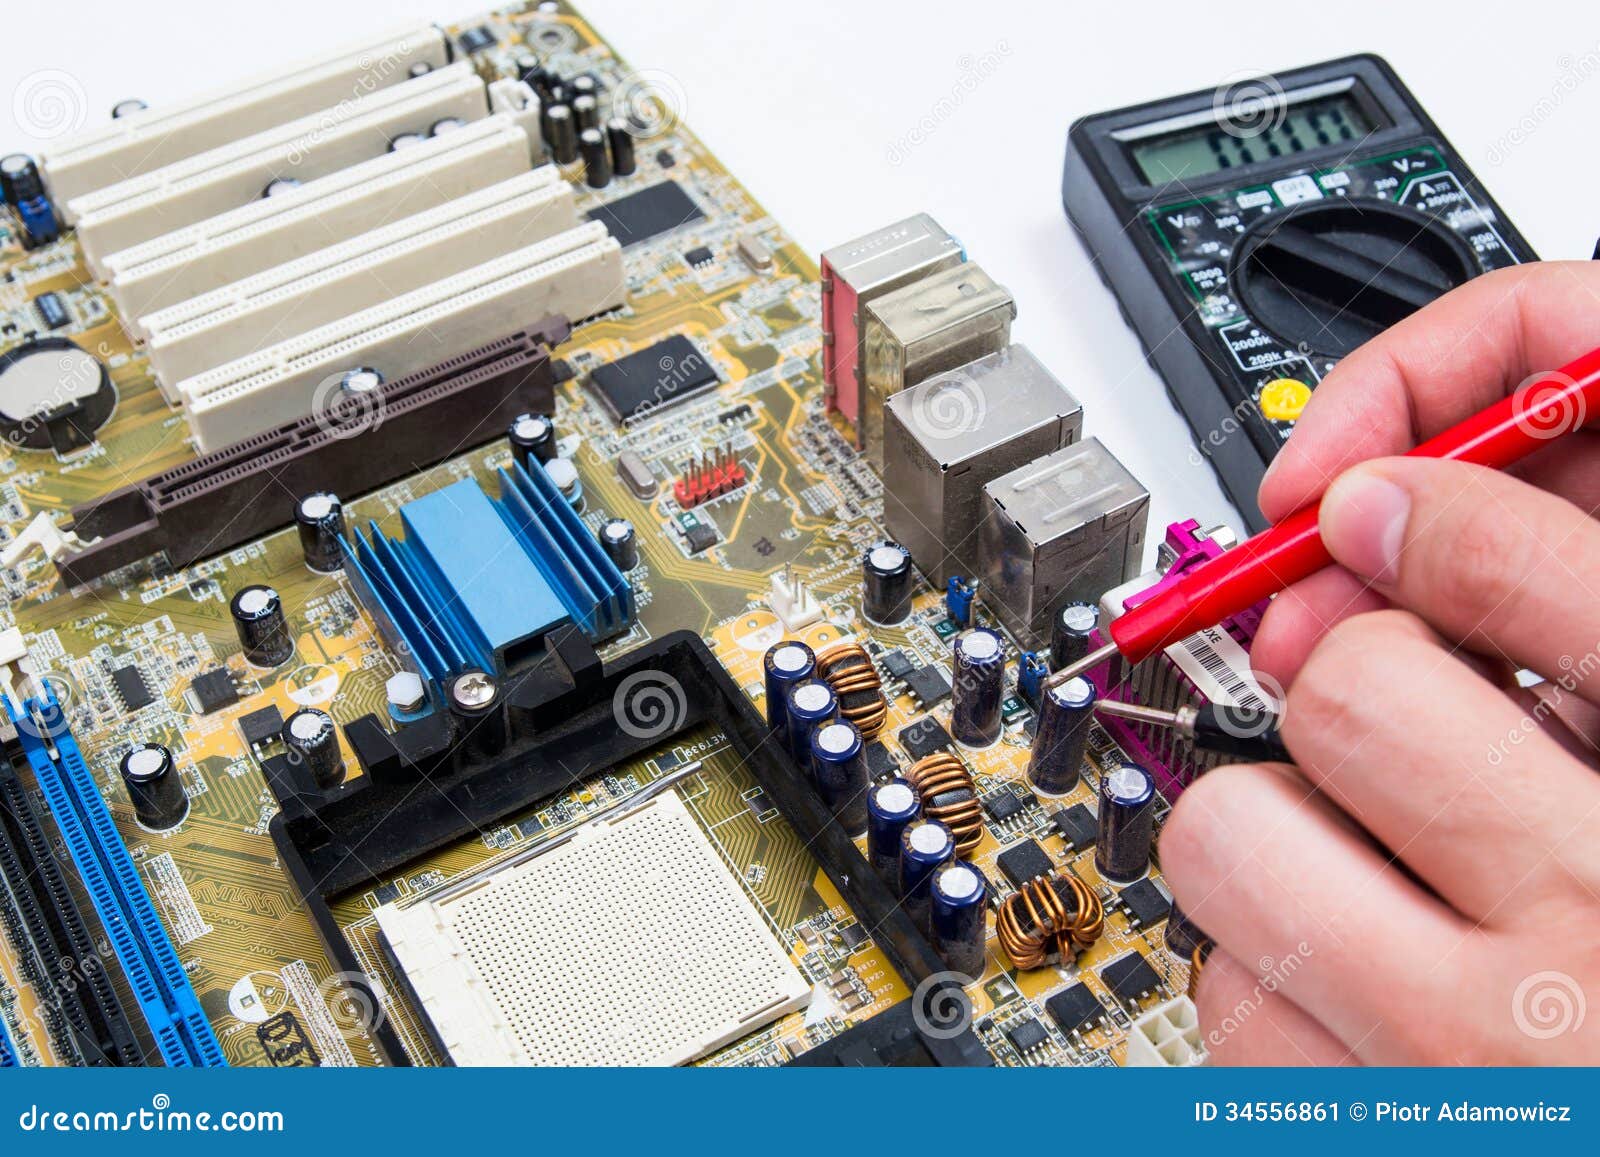 https://thumbs.dreamstime.com/z/man-repairing-computer-hardware-motherboard-measure-34556861.jpg